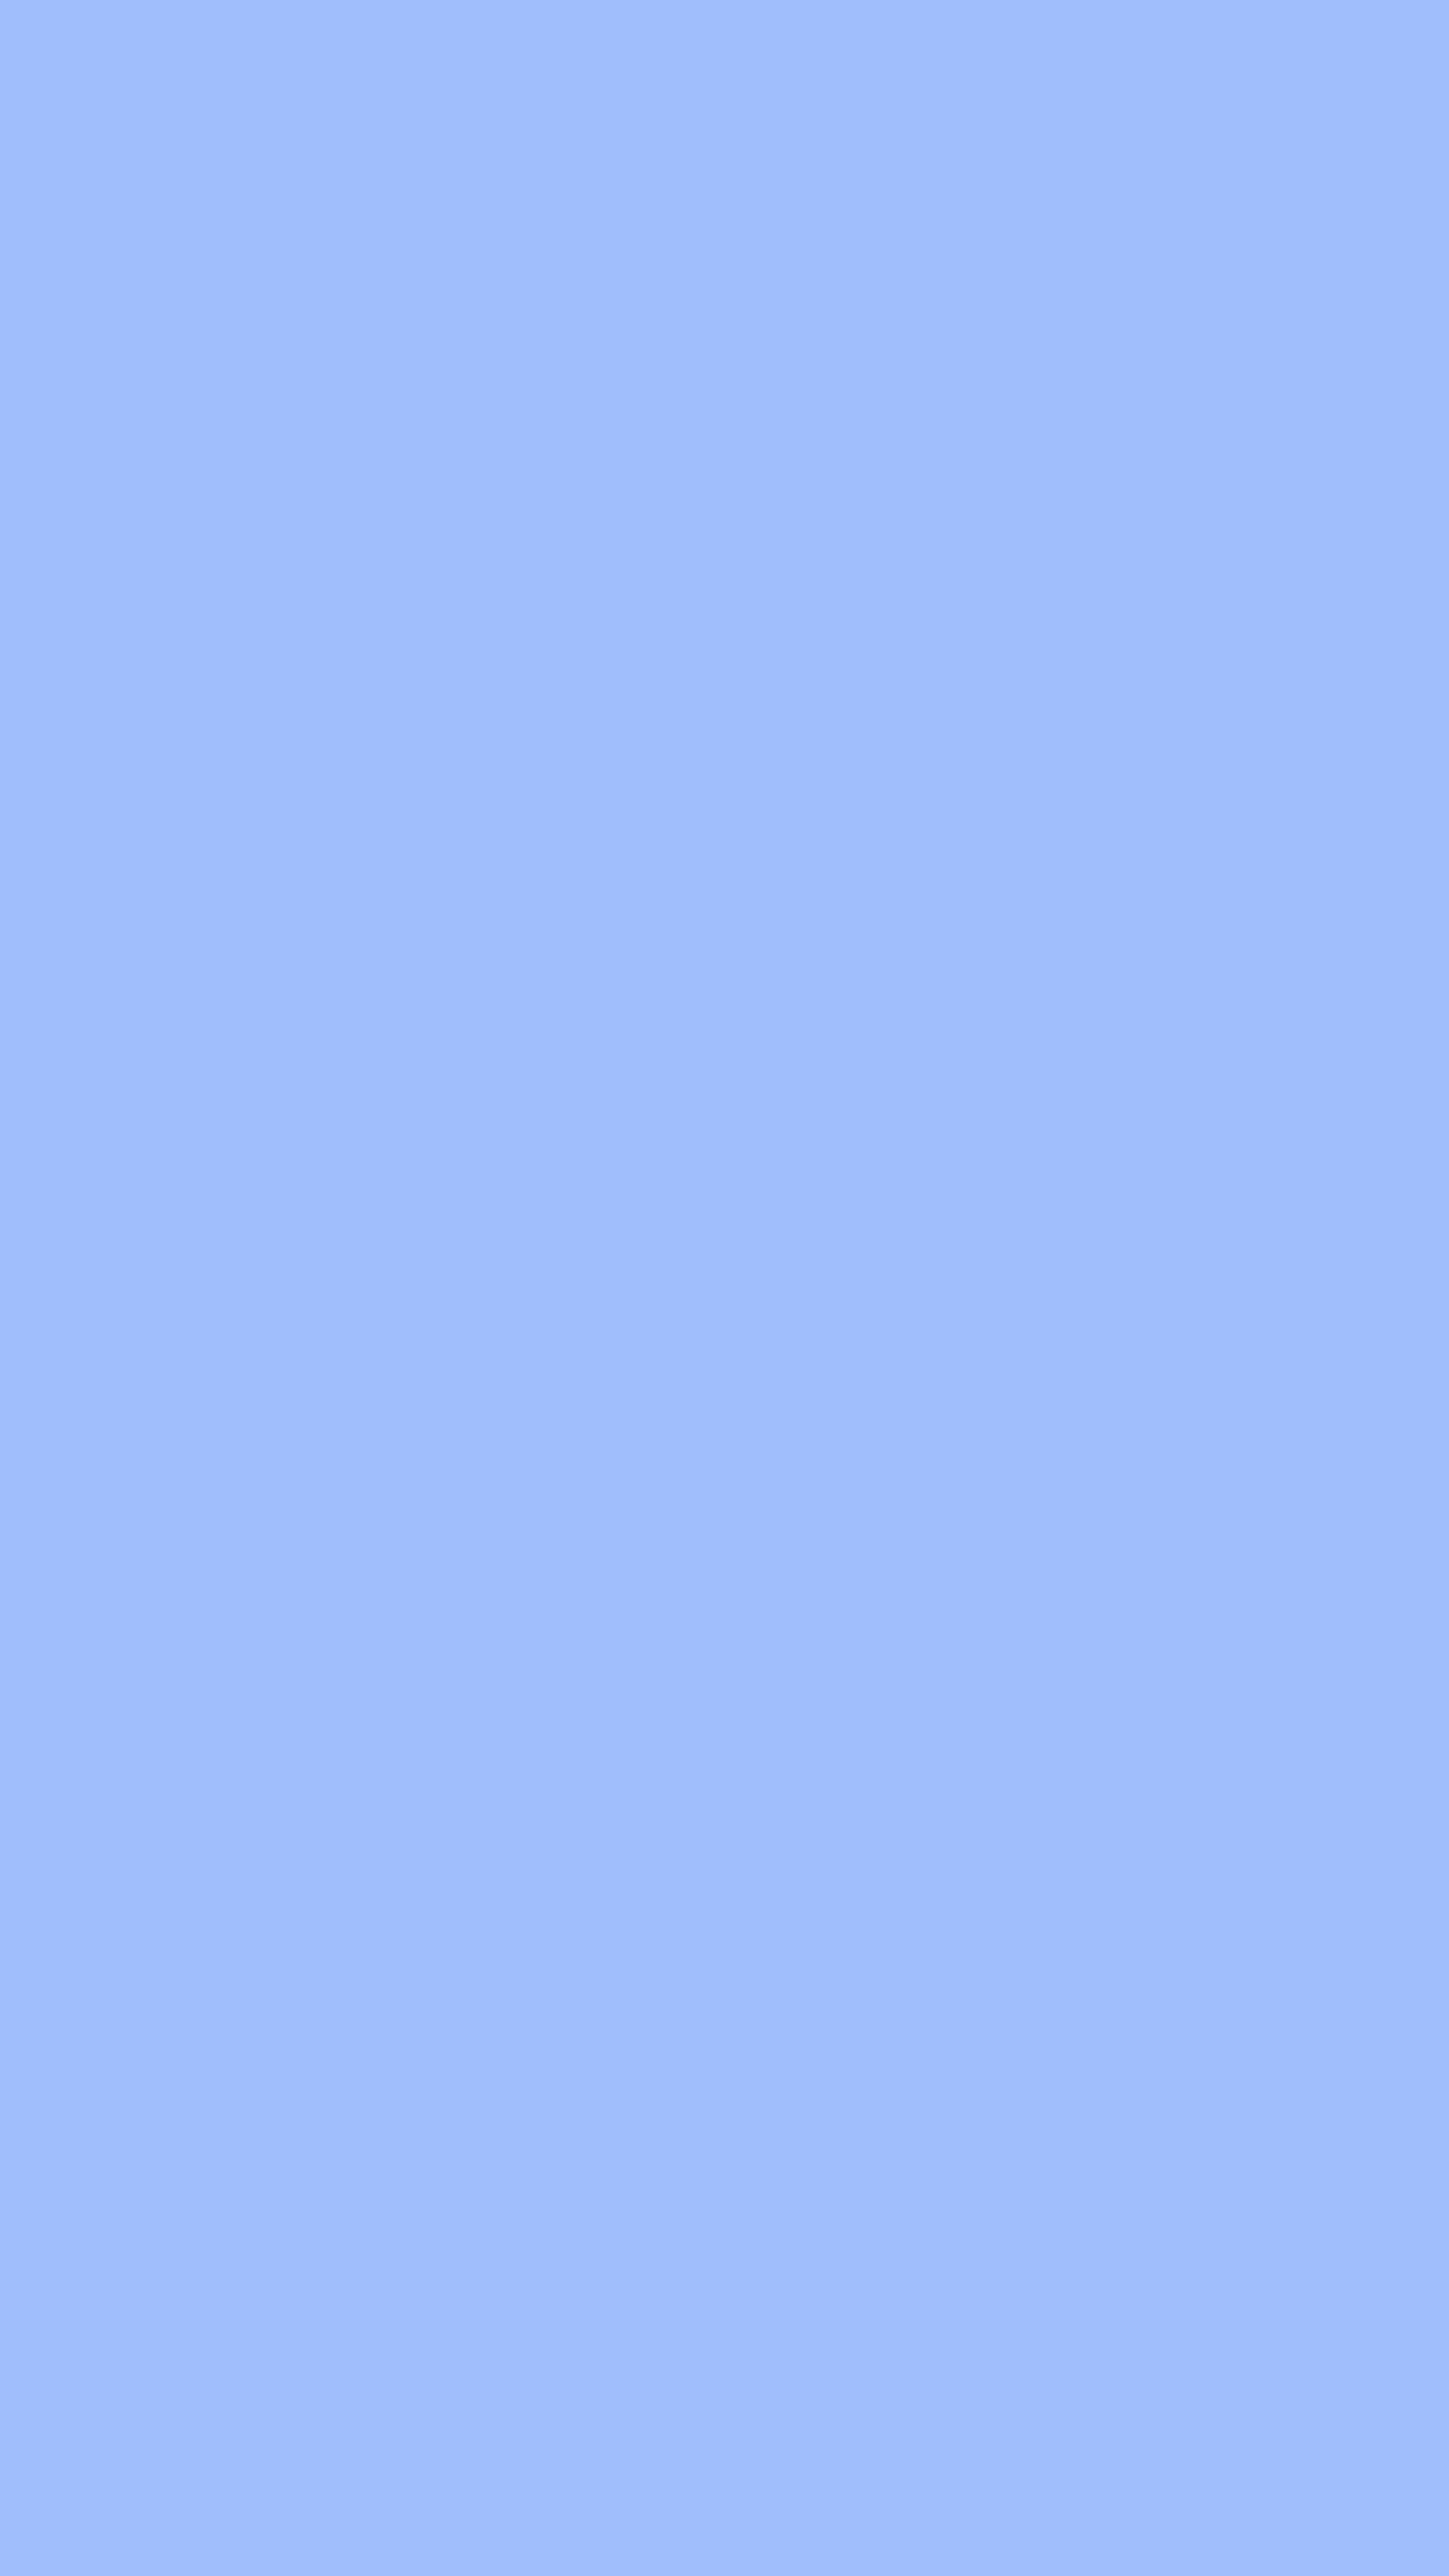 Bright Blue Sky Simple Background Wallpaper[10c3cea591d2440c9e7c]